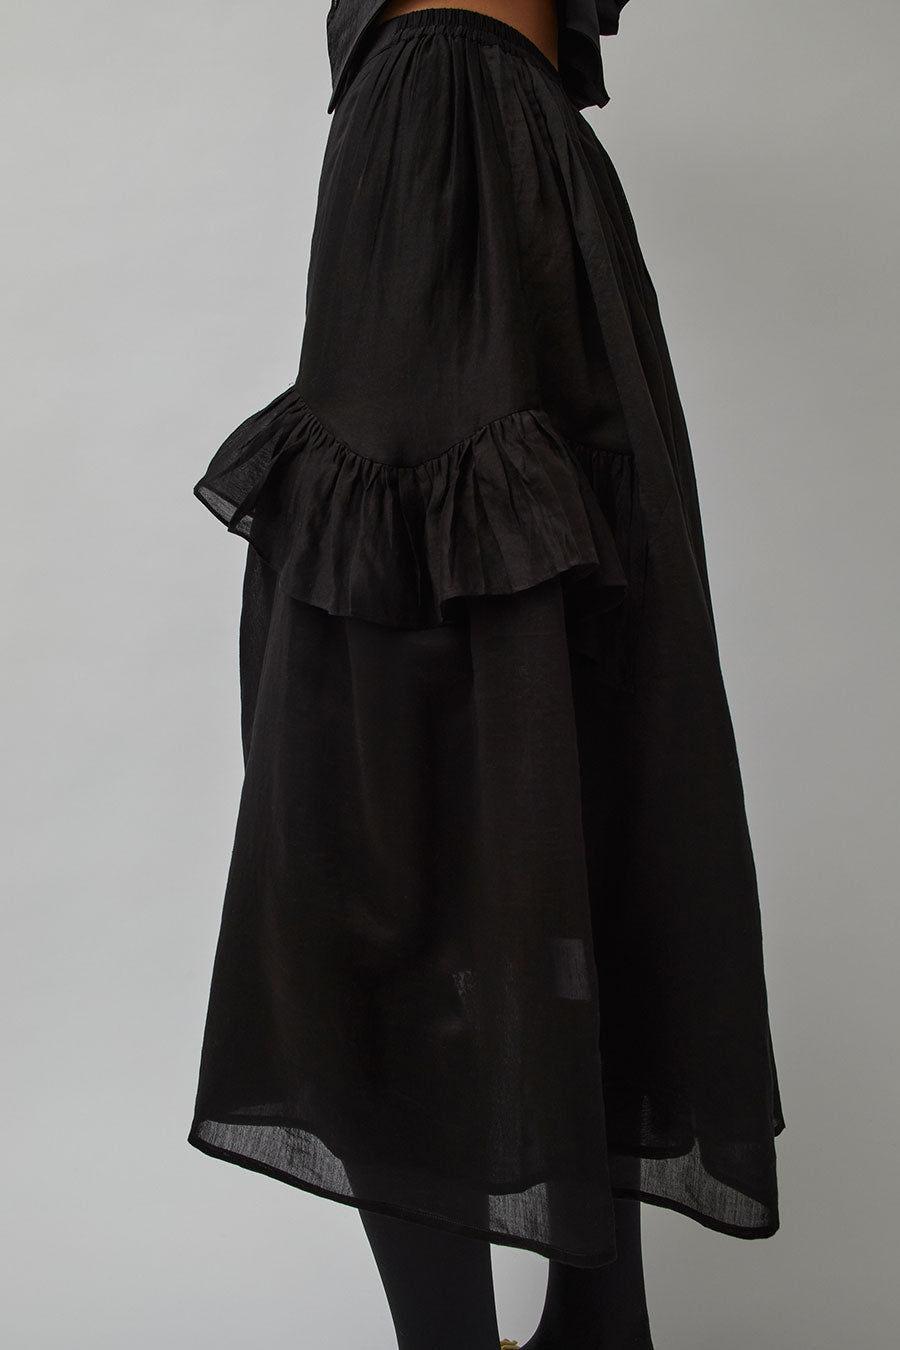 Anaak Ida Asymmetrical Midi Skirt in Onyx